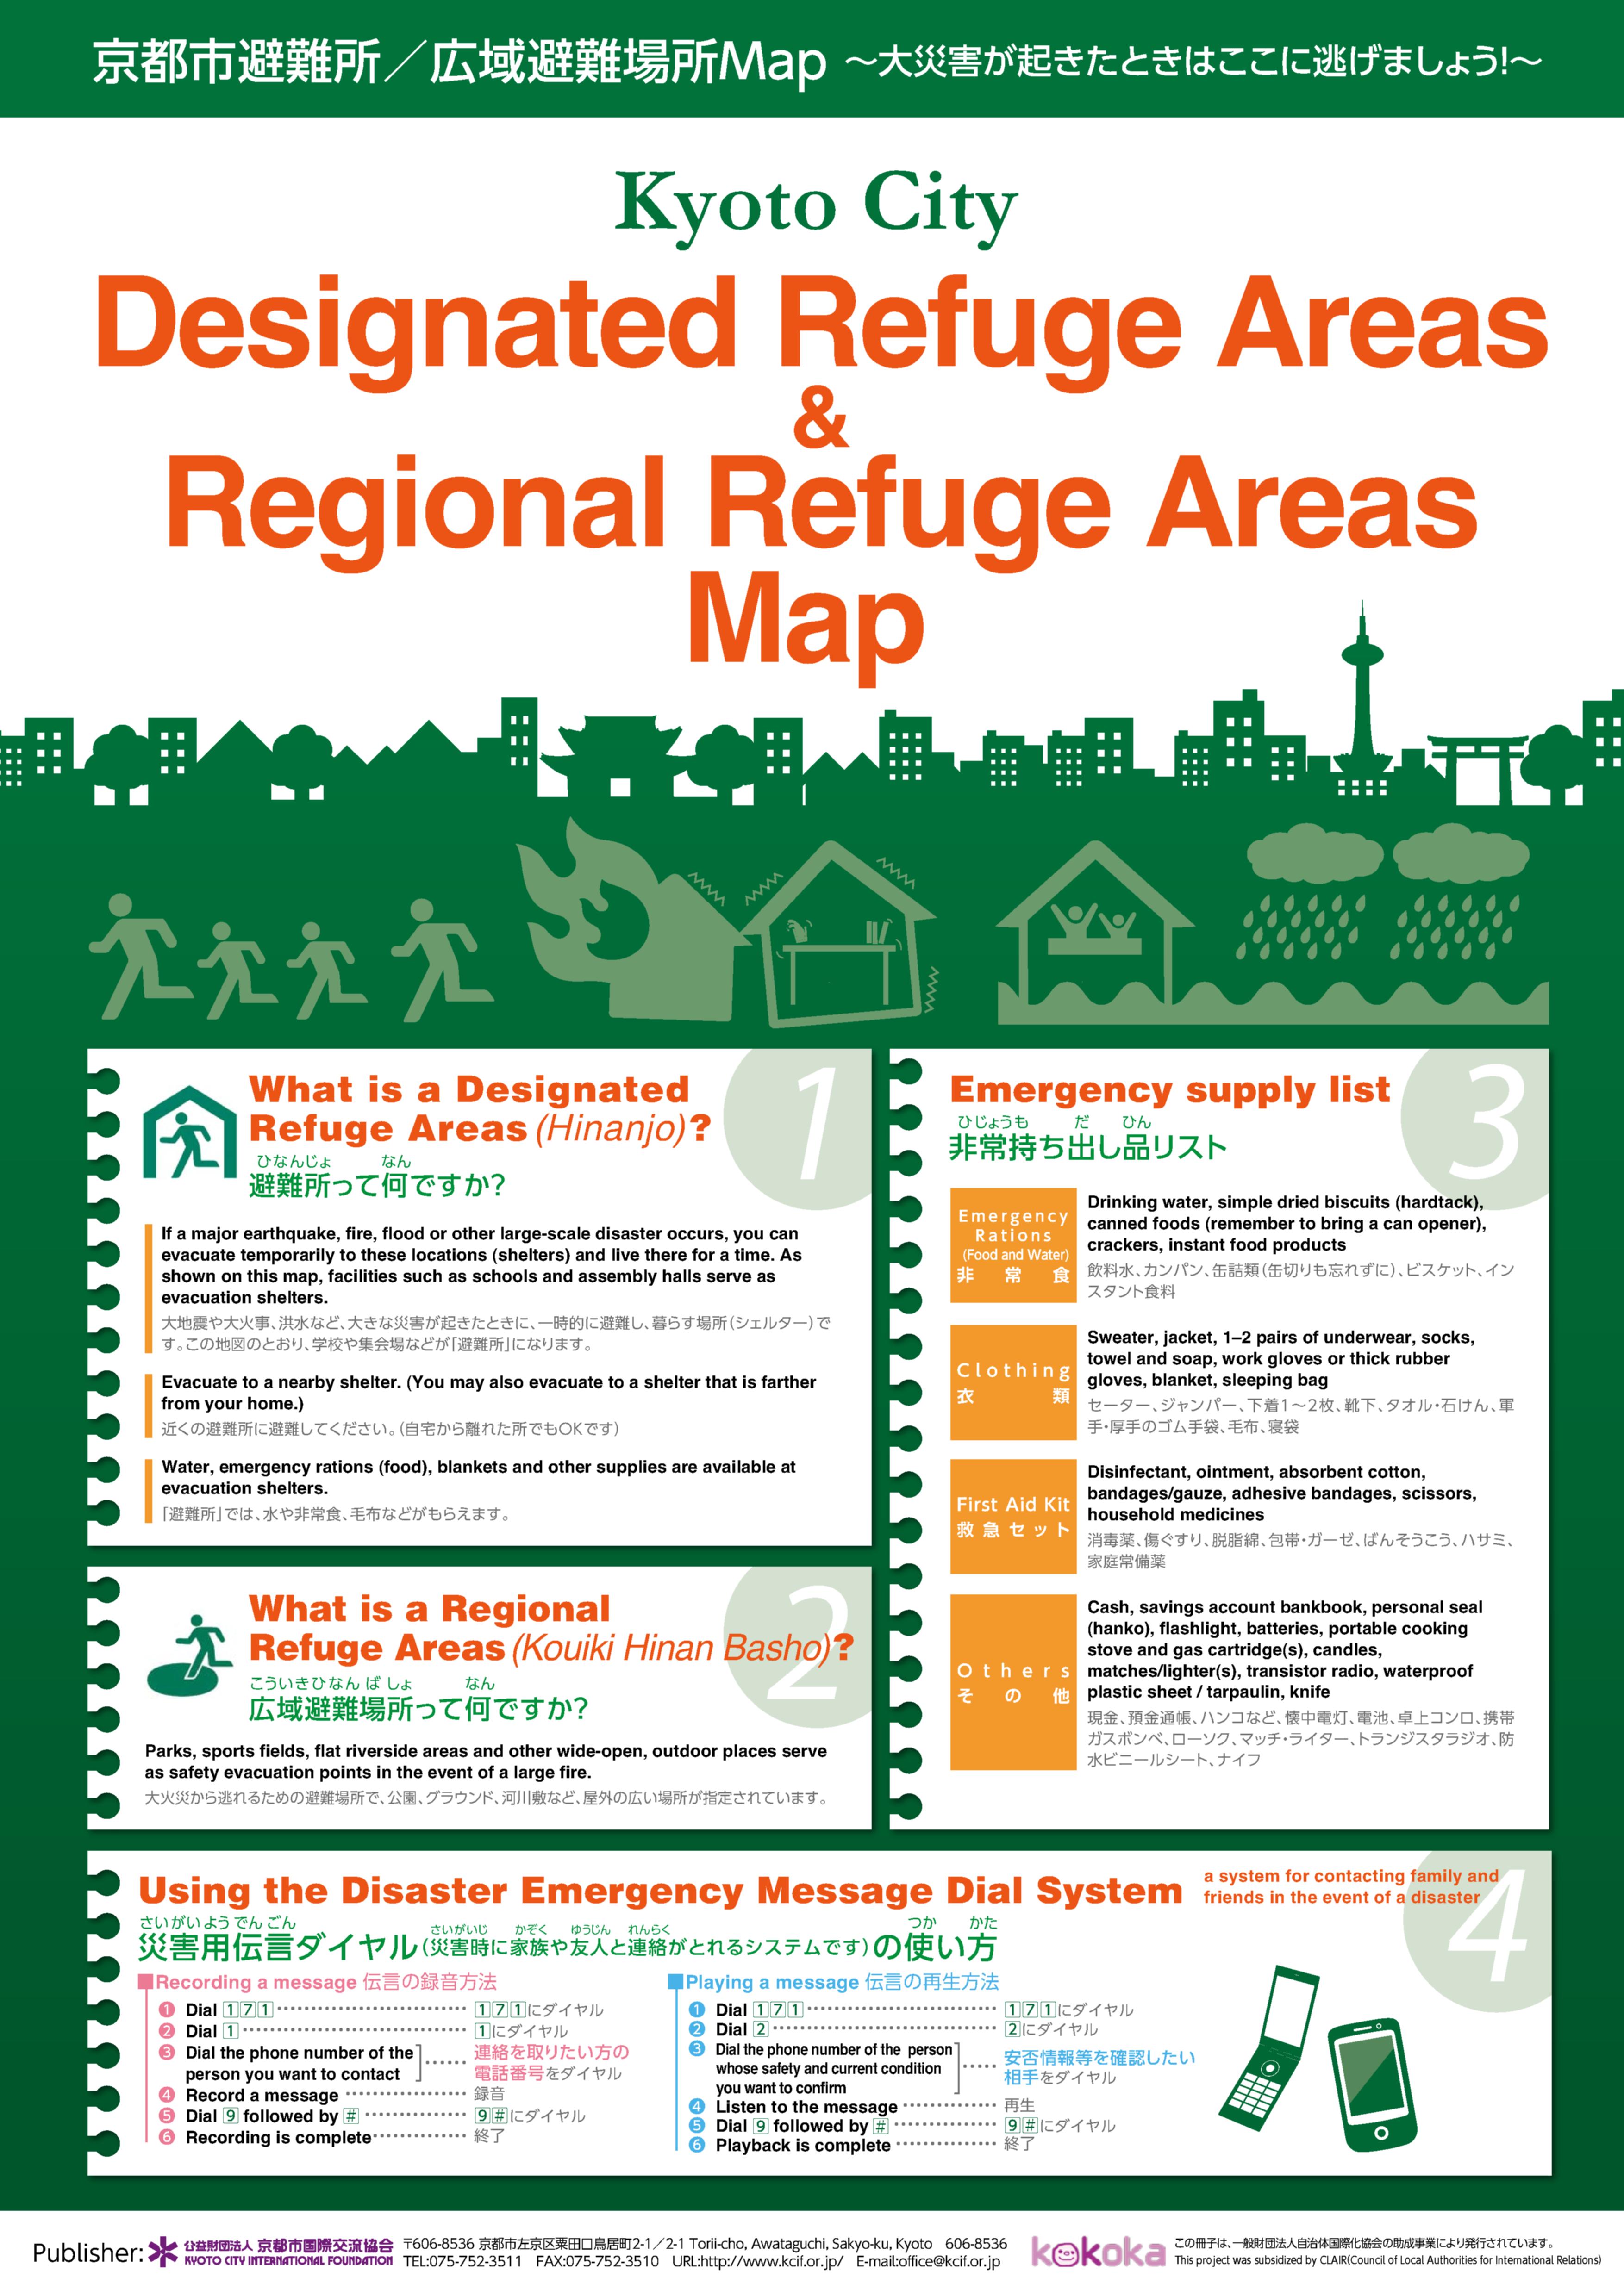 Kyoto City Designated Refuge Areas & Regional Refuge Areas Map